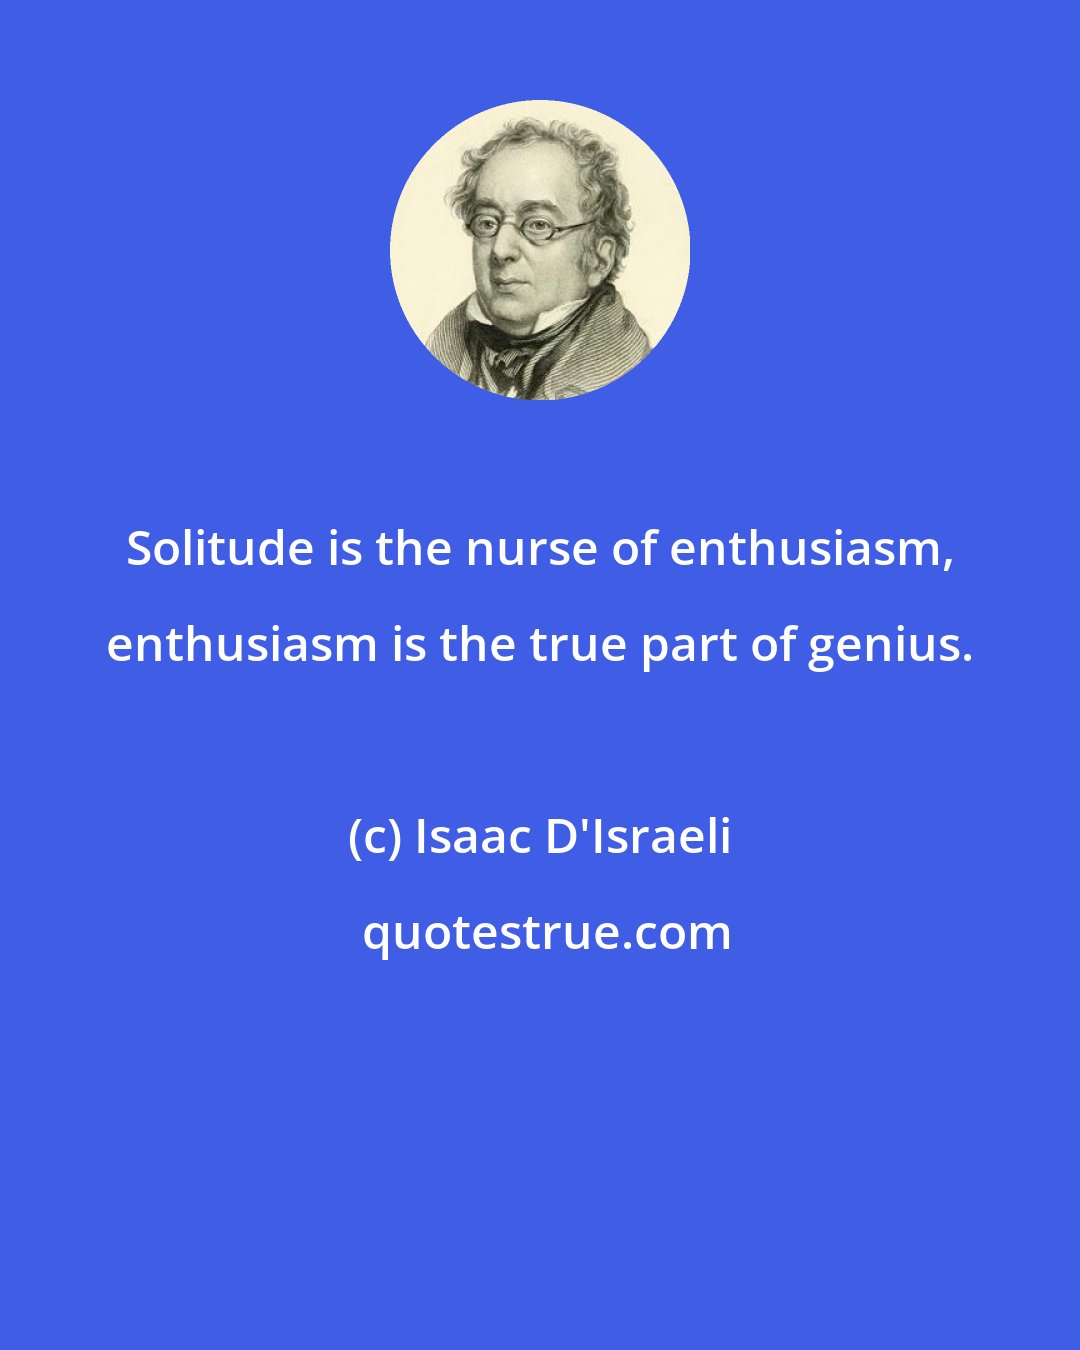 Isaac D'Israeli: Solitude is the nurse of enthusiasm, enthusiasm is the true part of genius.